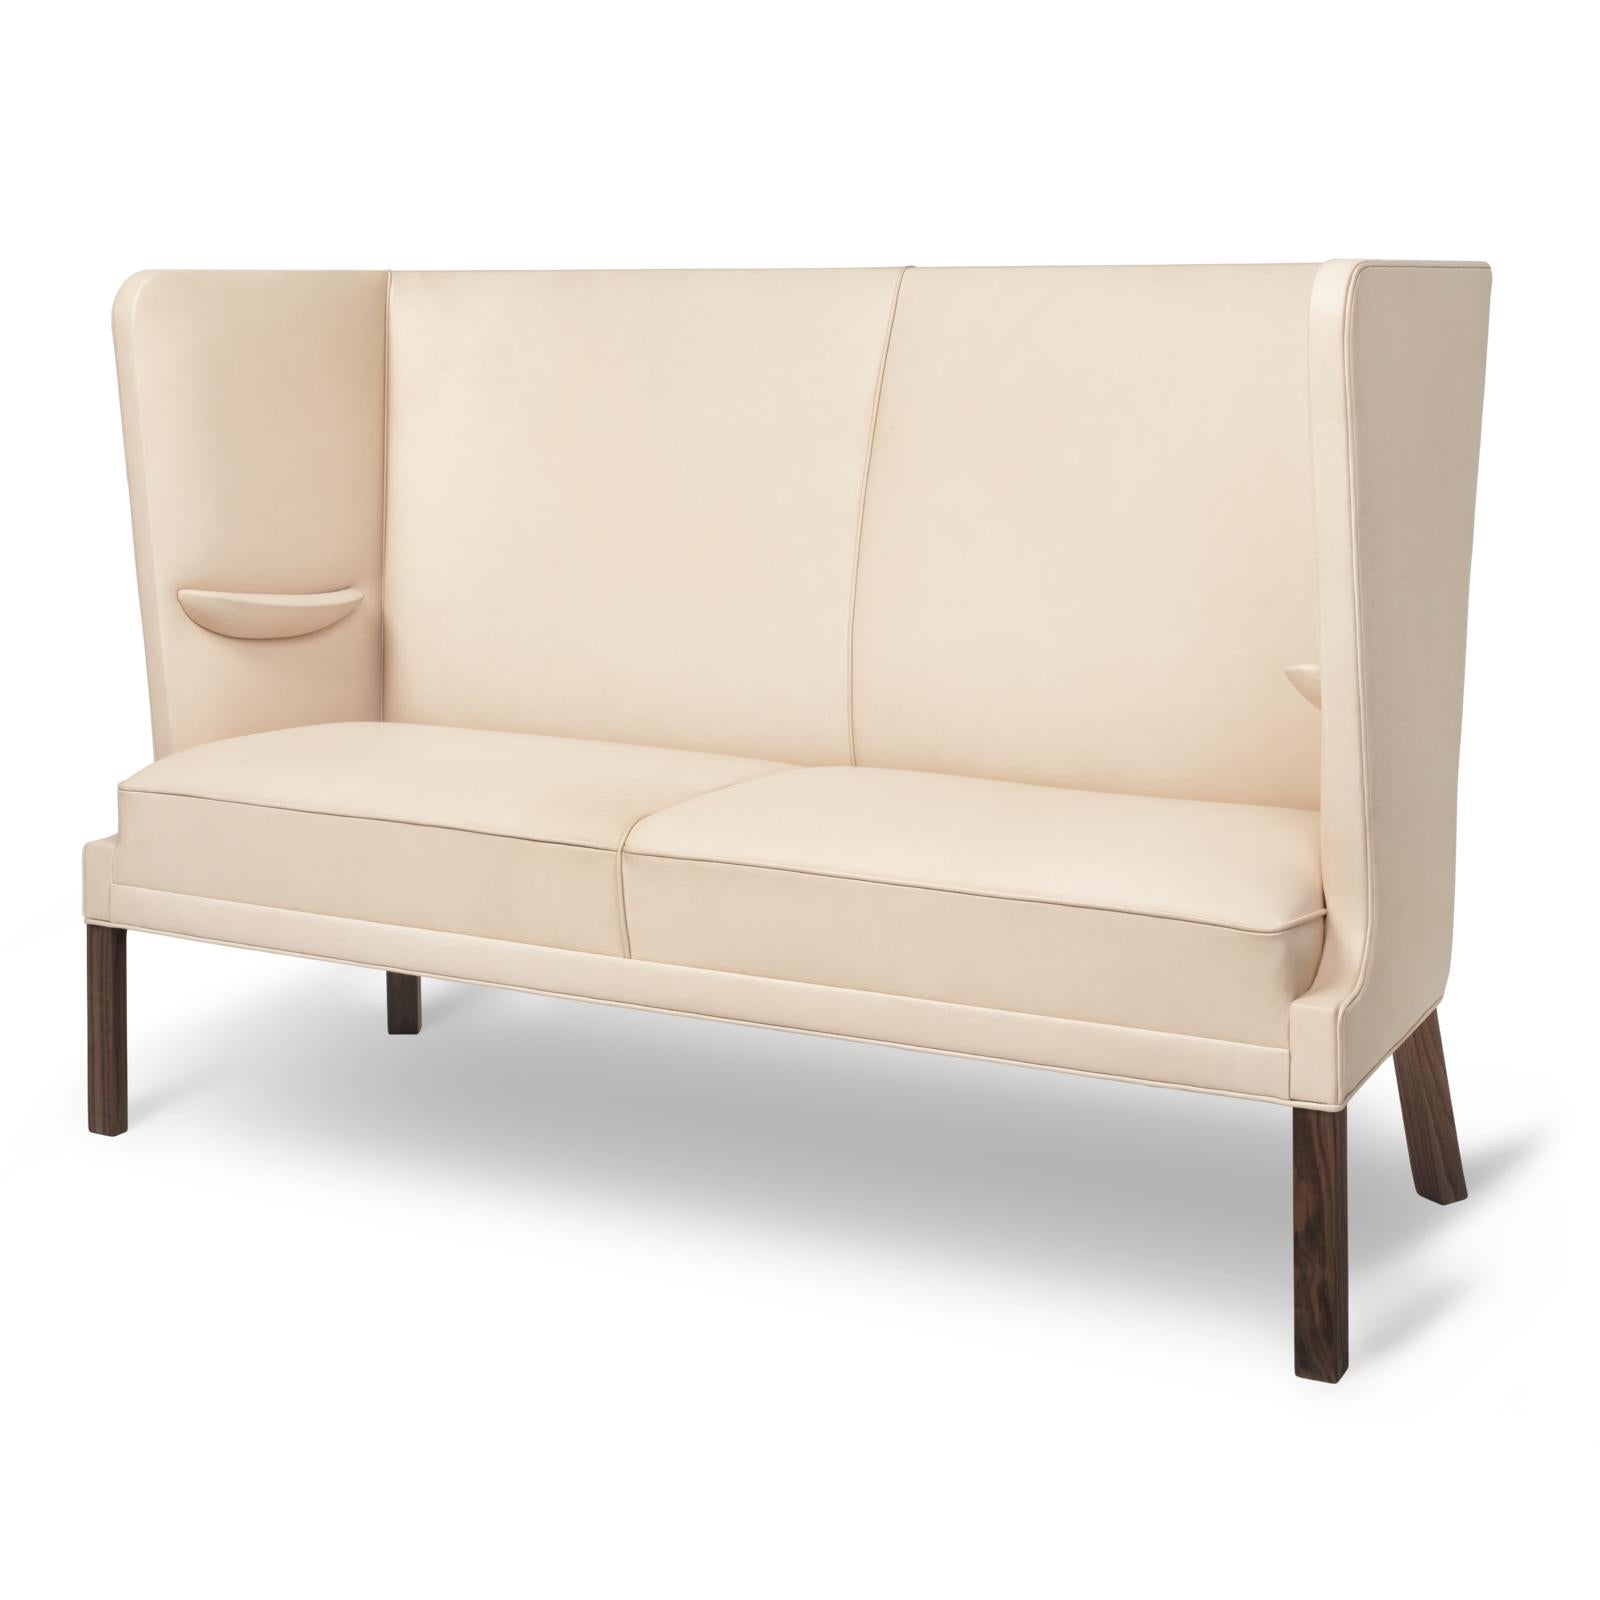 Carl Hansen Fh436 Coupé Sofa, Oiled Walnut/Natural Leather